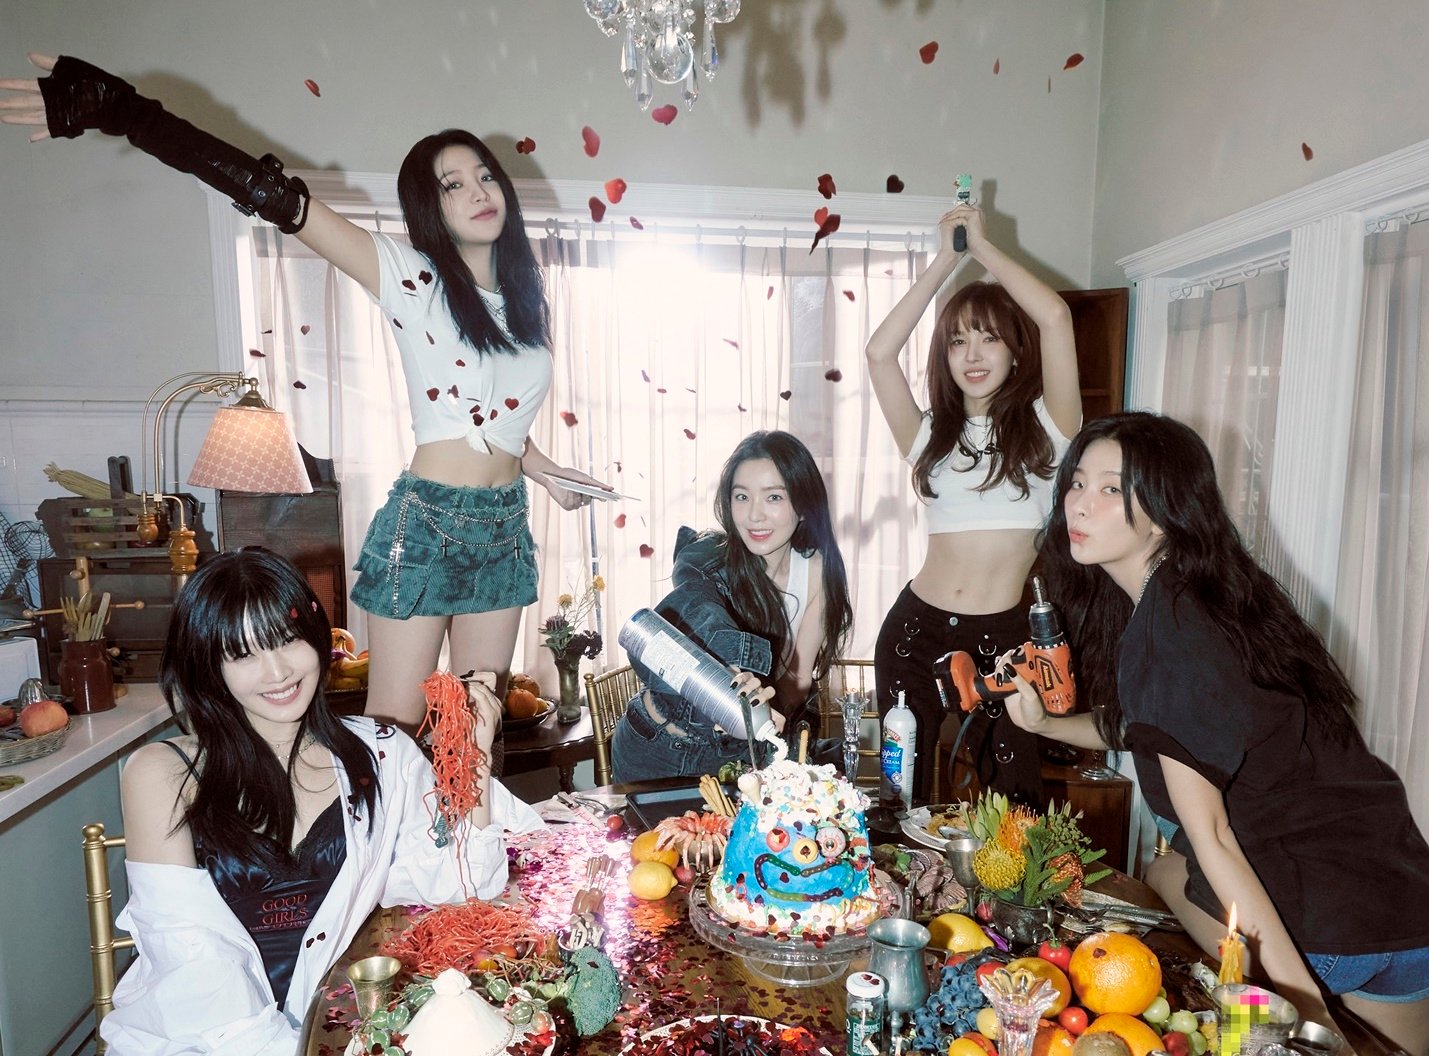 Red Velvet Release New Mini Album and Single, "Birthday"